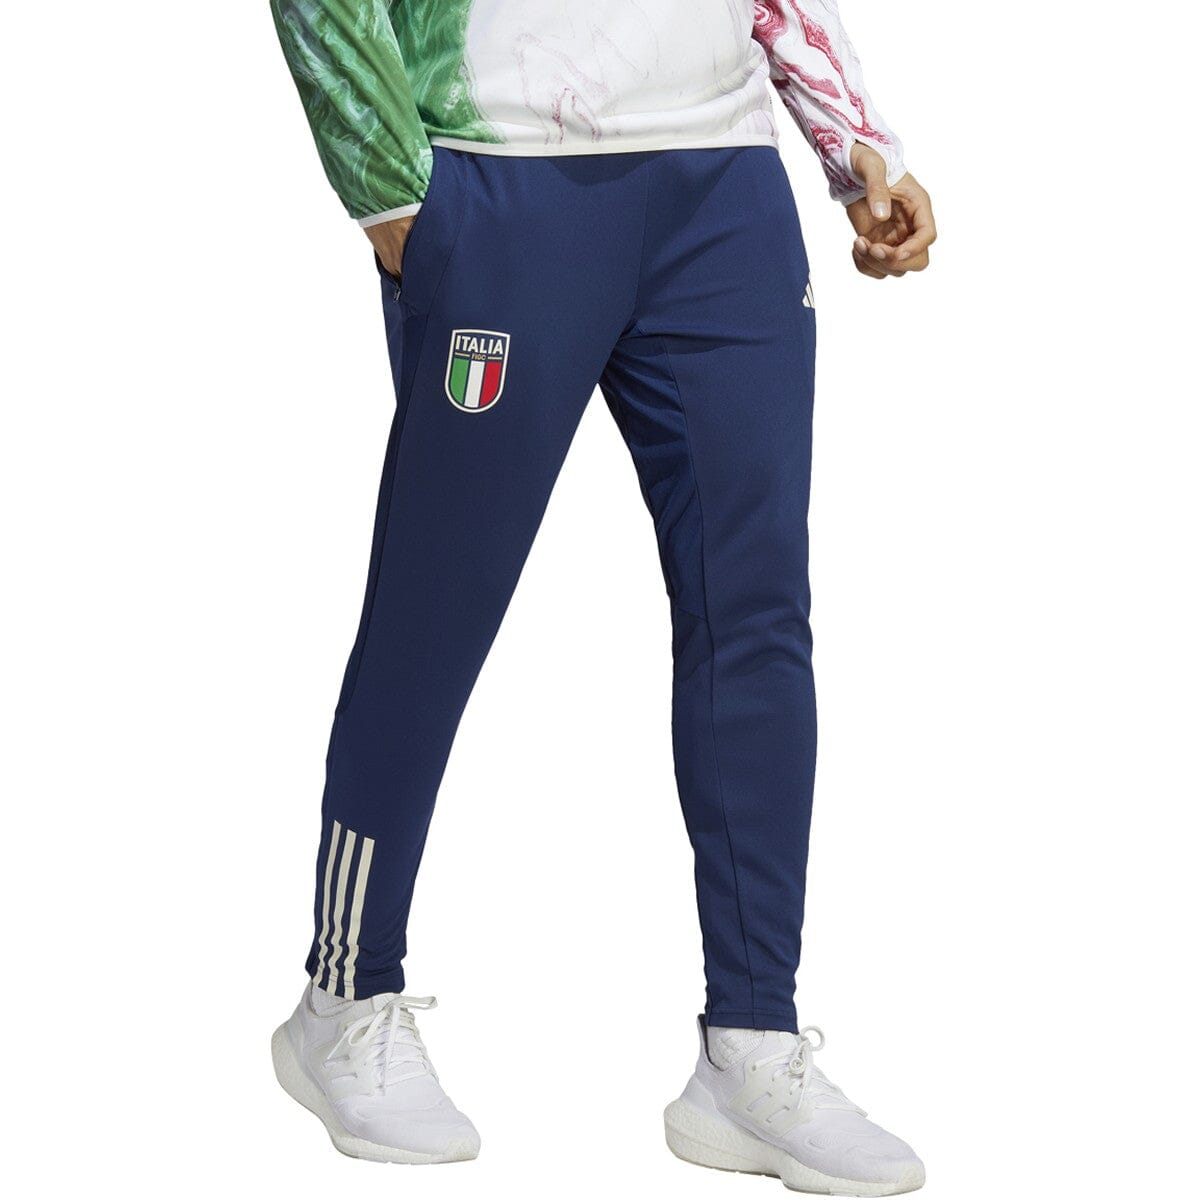 Top-Quality adidas Soccer Pants  Tiro & Convido - Goal Kick Soccer